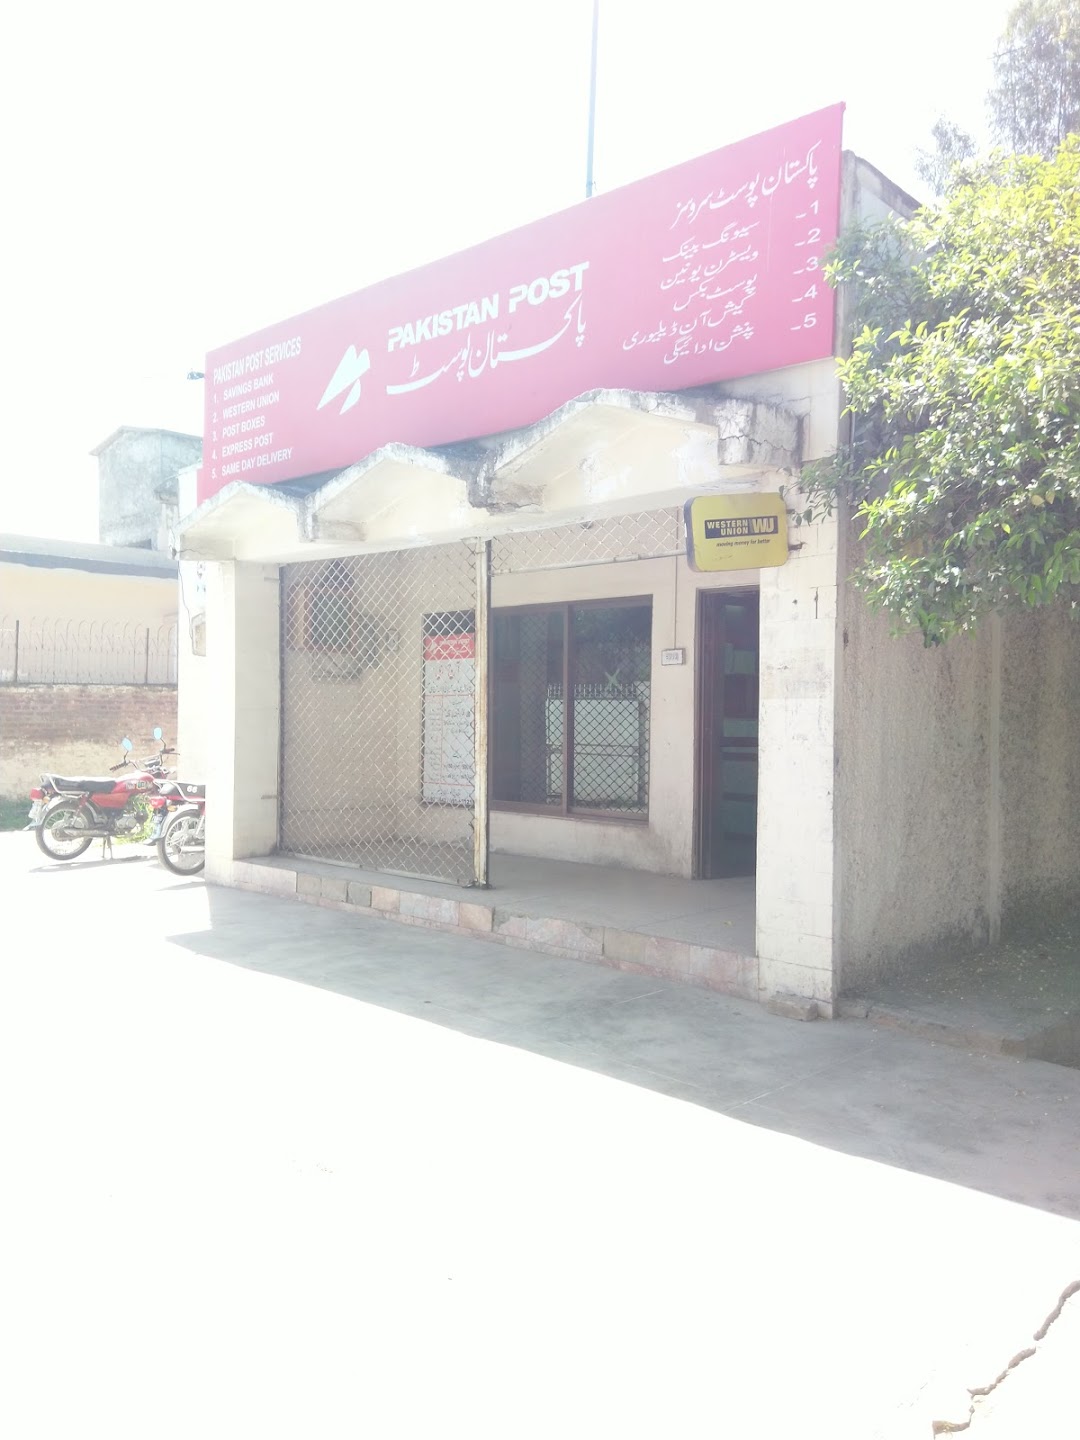 Phase 1 Hayatabad Post Office